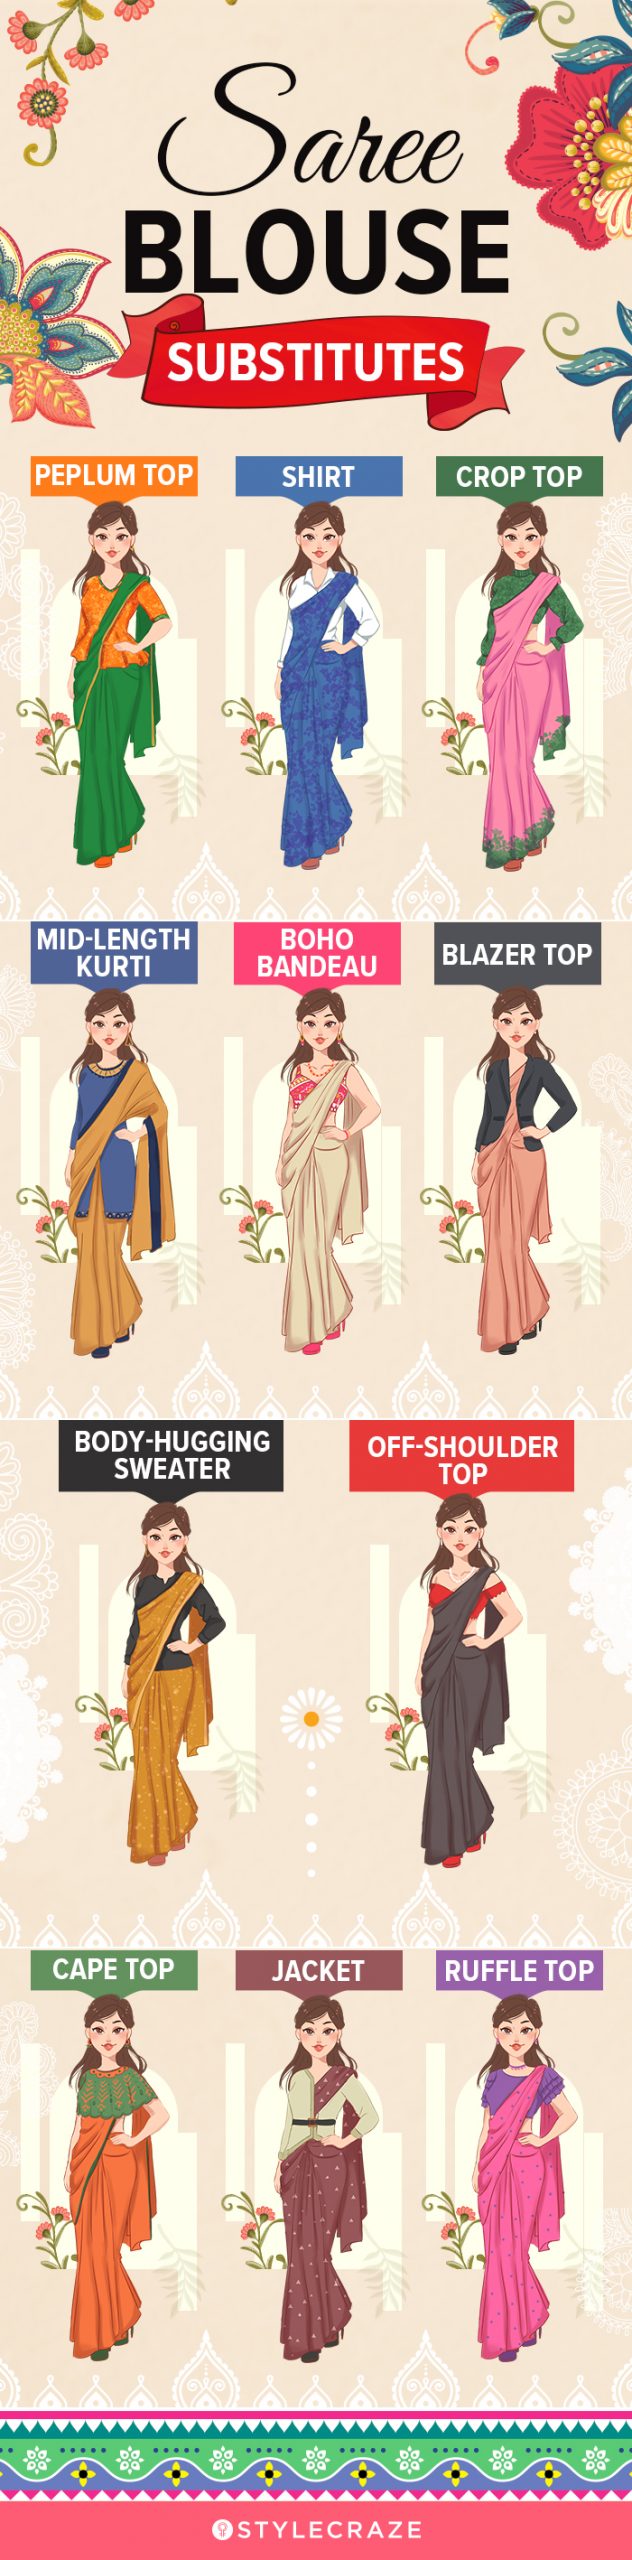 saree blouse substitutes (infographic)